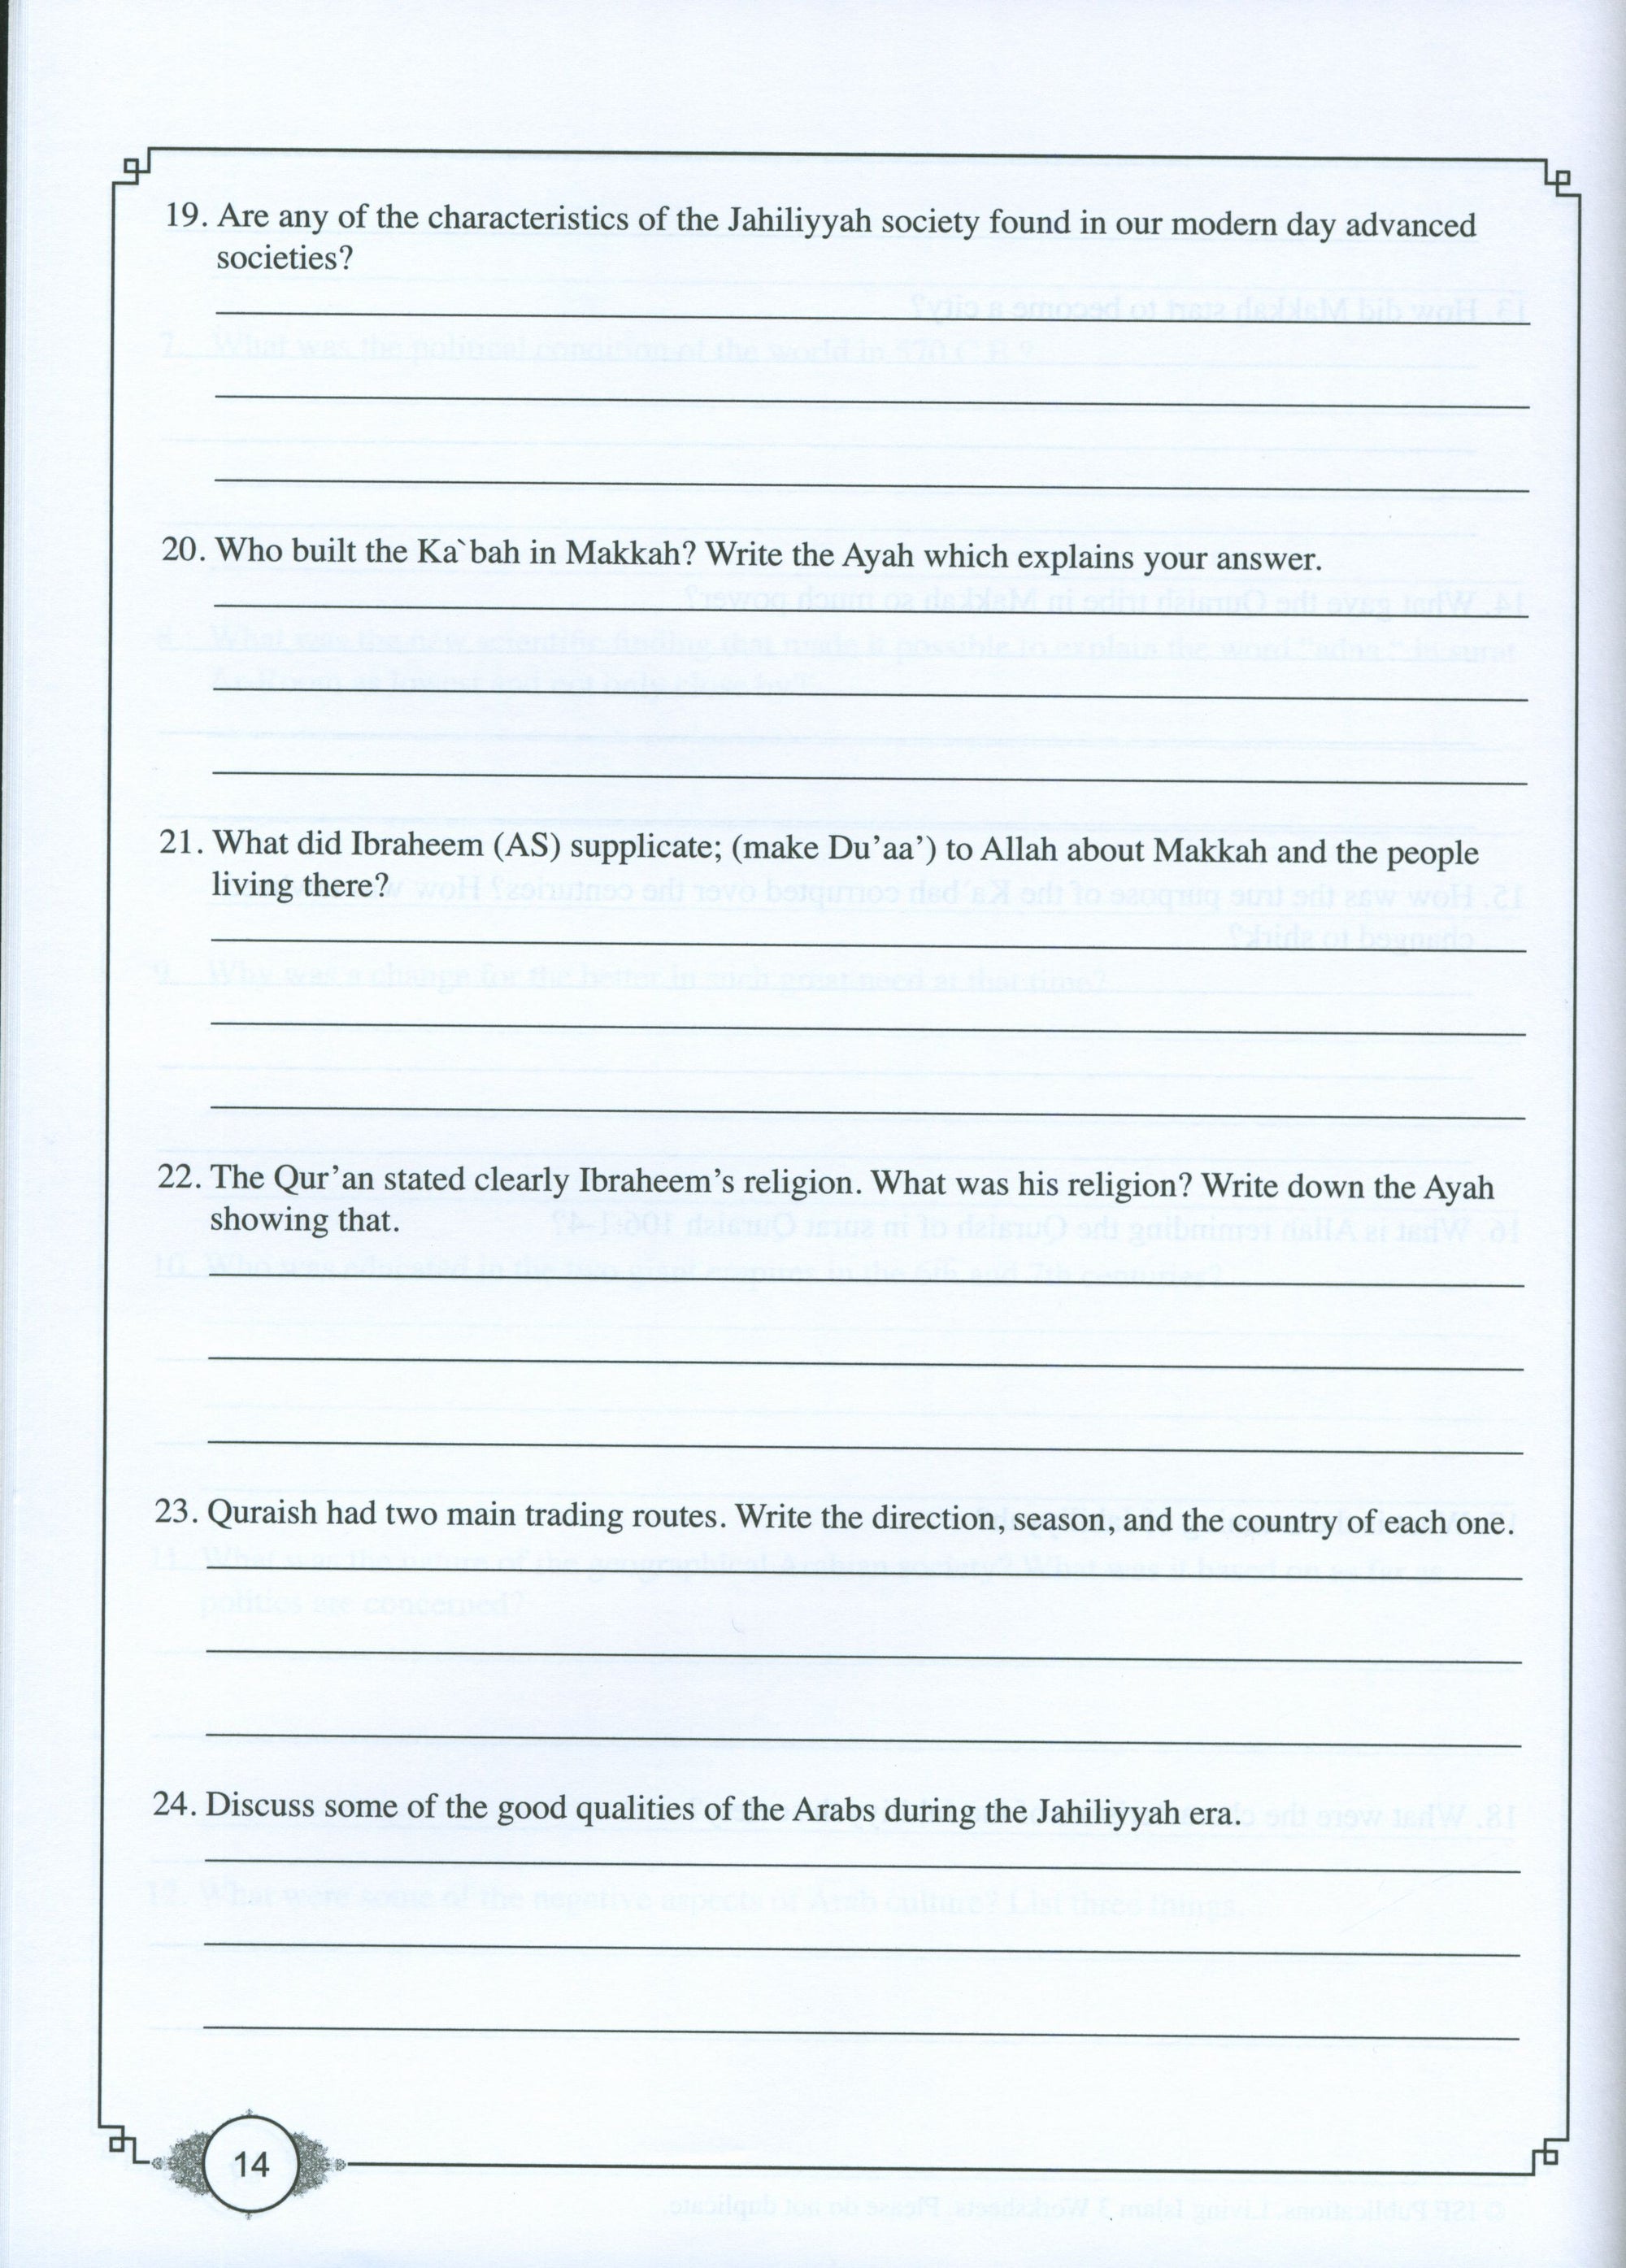 Living Islam Worksheets Level 3 - Prophet of Mercy (10th Grade)